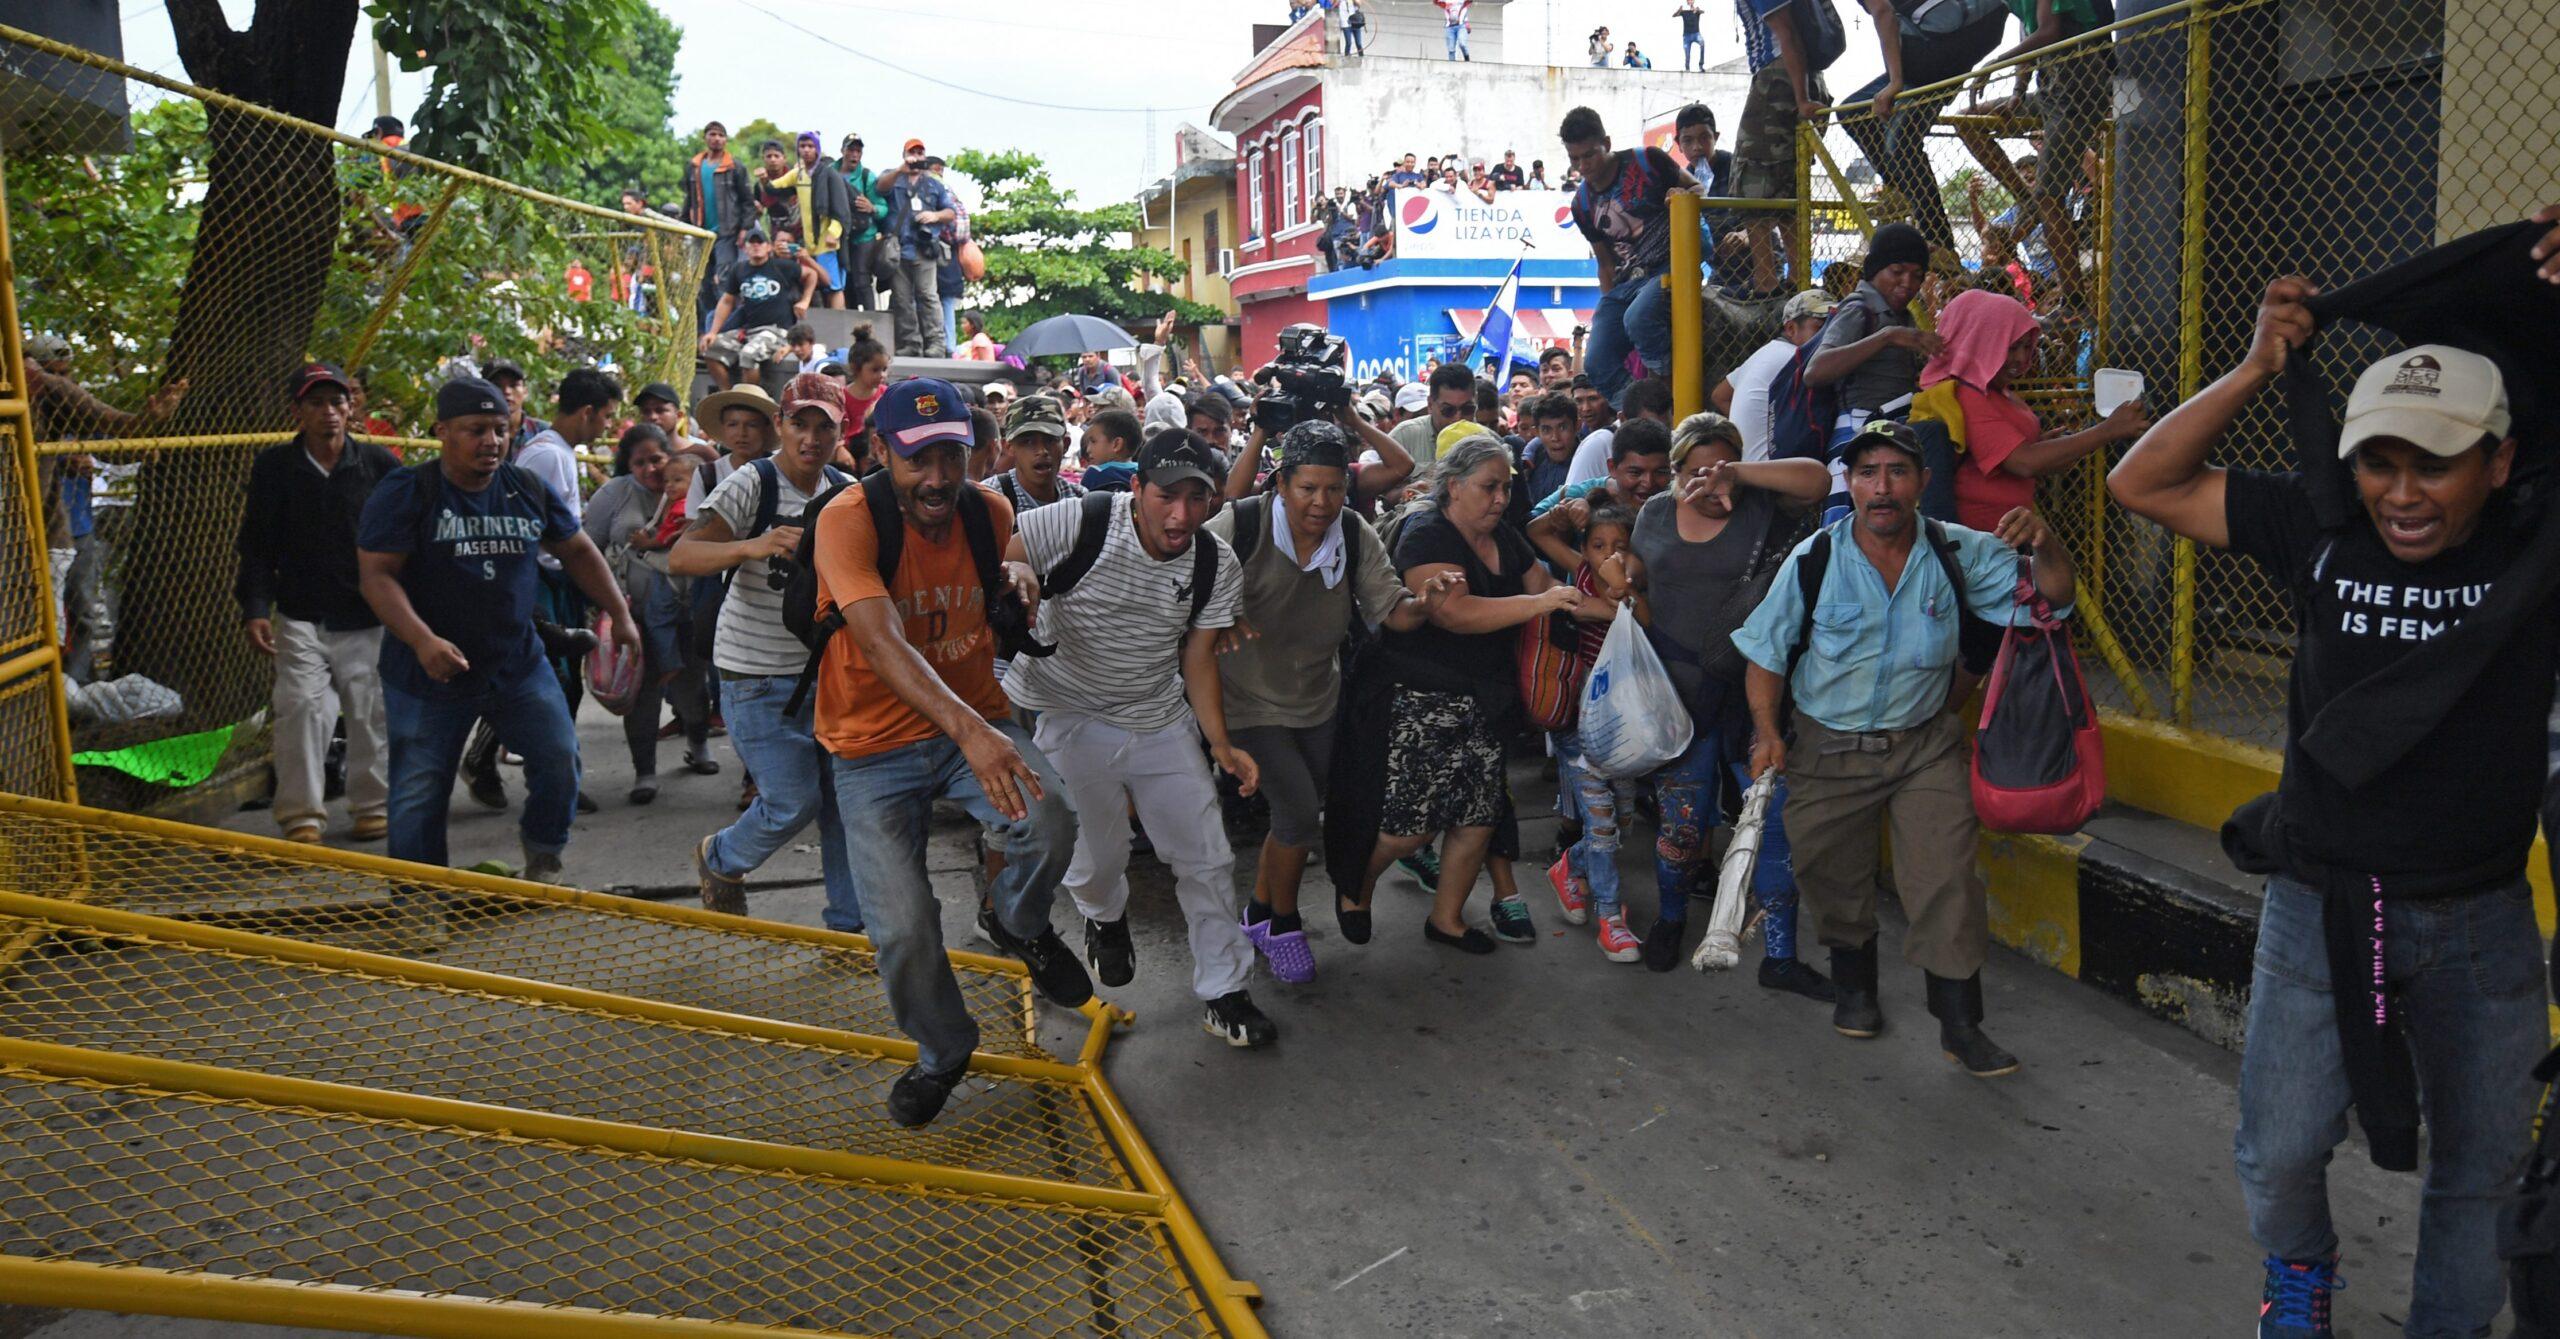 Solo queremos trabajo: migrantes logran llegar a México pese a cercos policiales